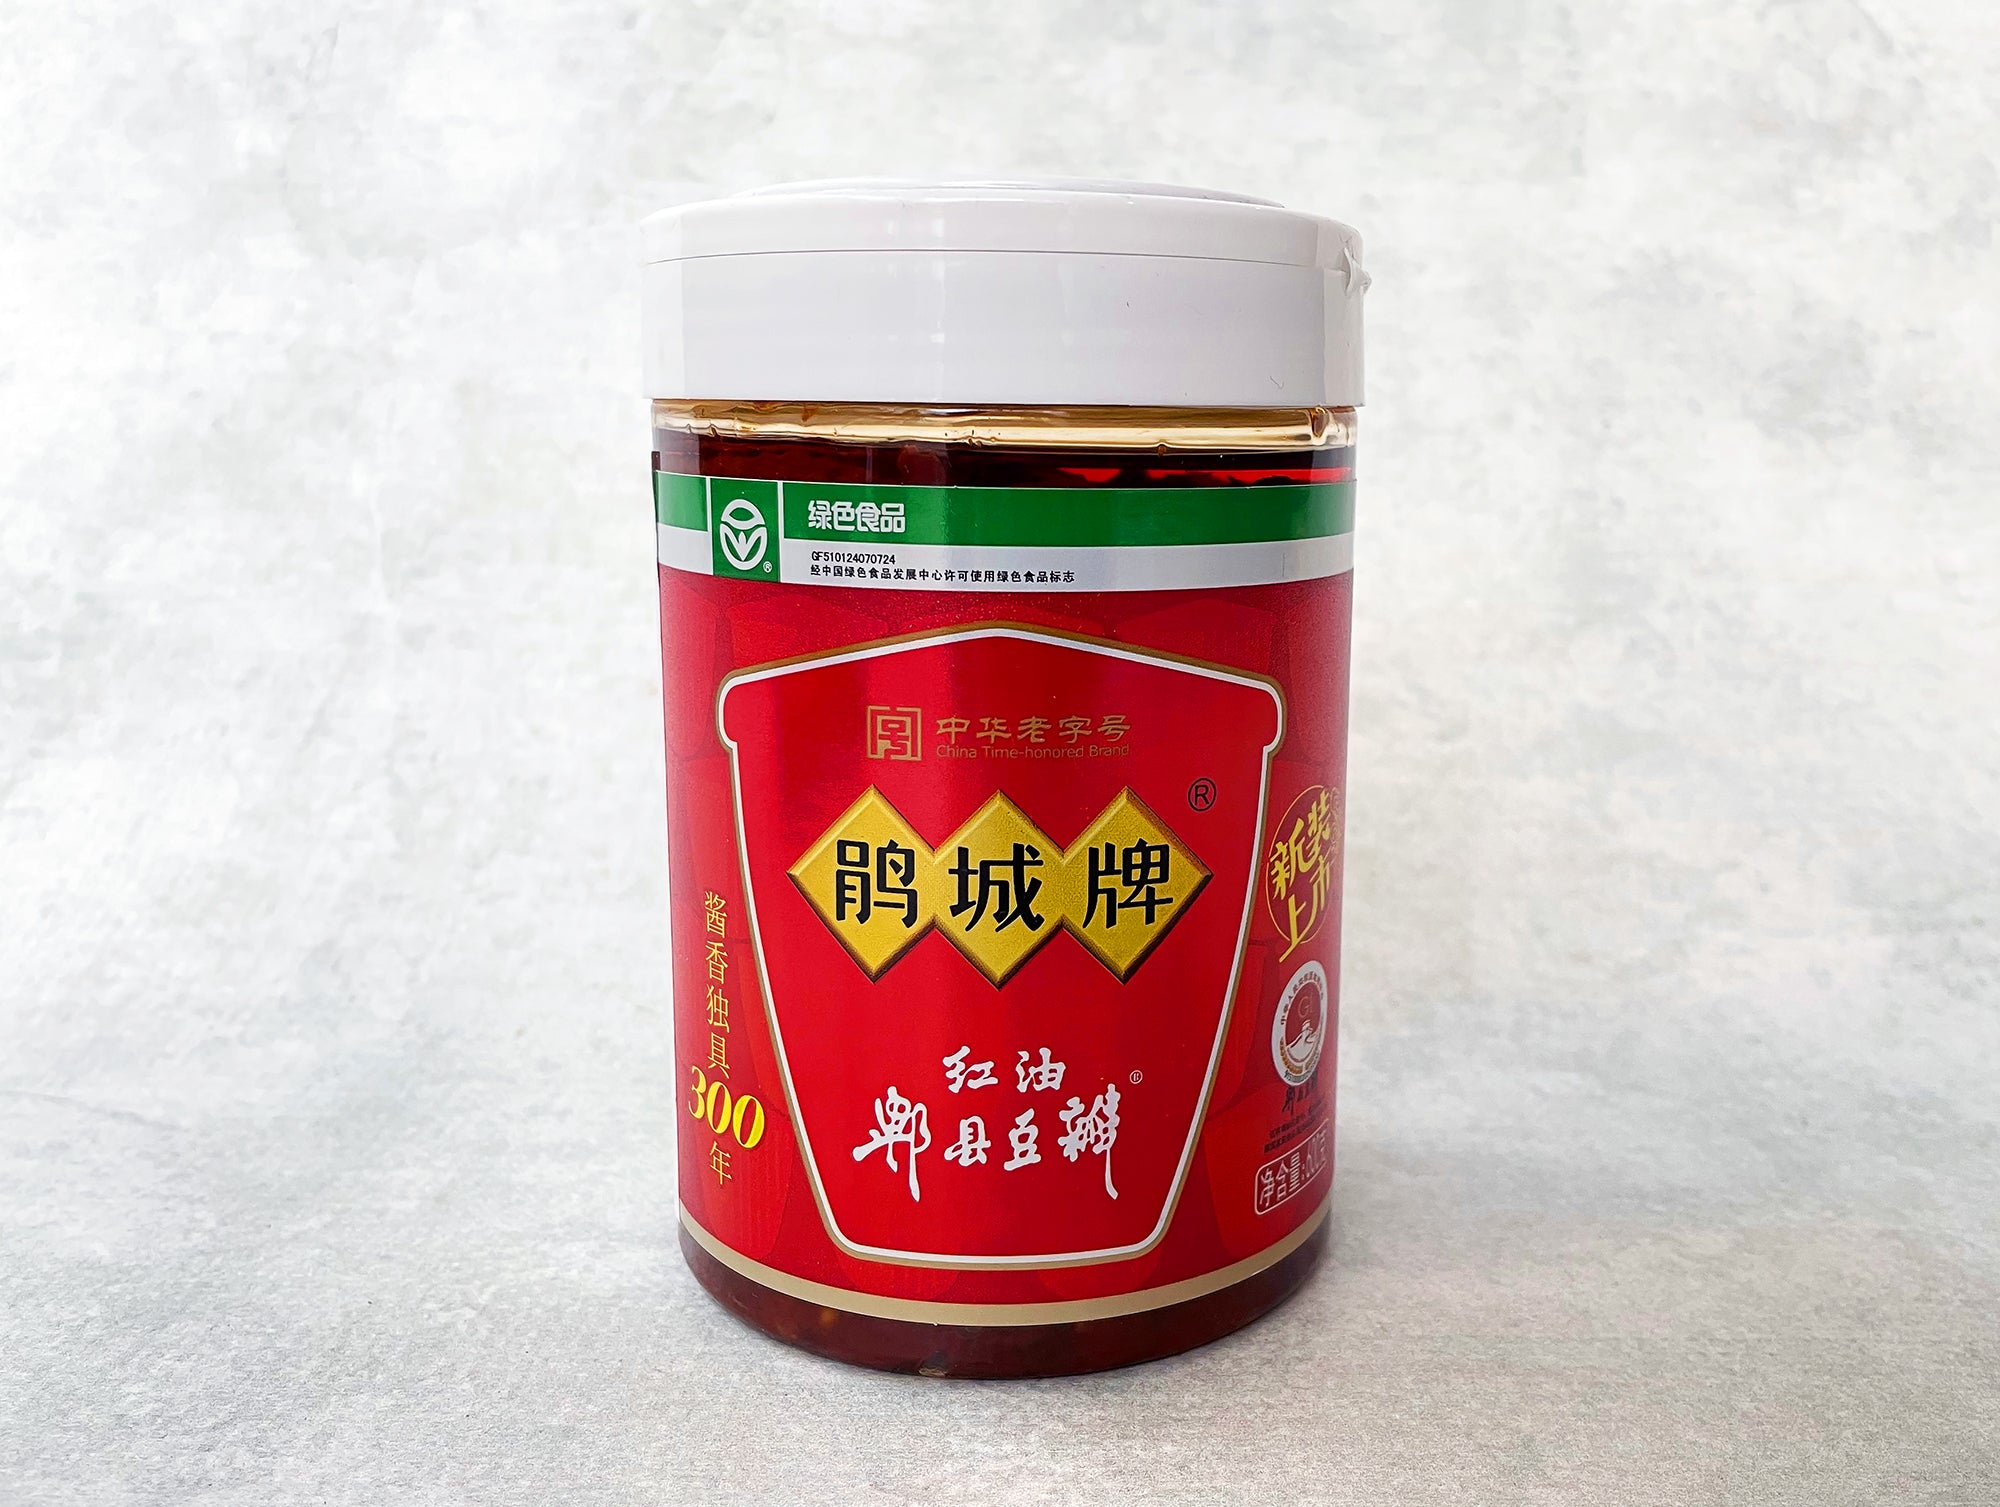 Pixian Red-Oil Broad Bean Paste (Juan Cheng Doubanjiang) - The Mala Market | Tischsets